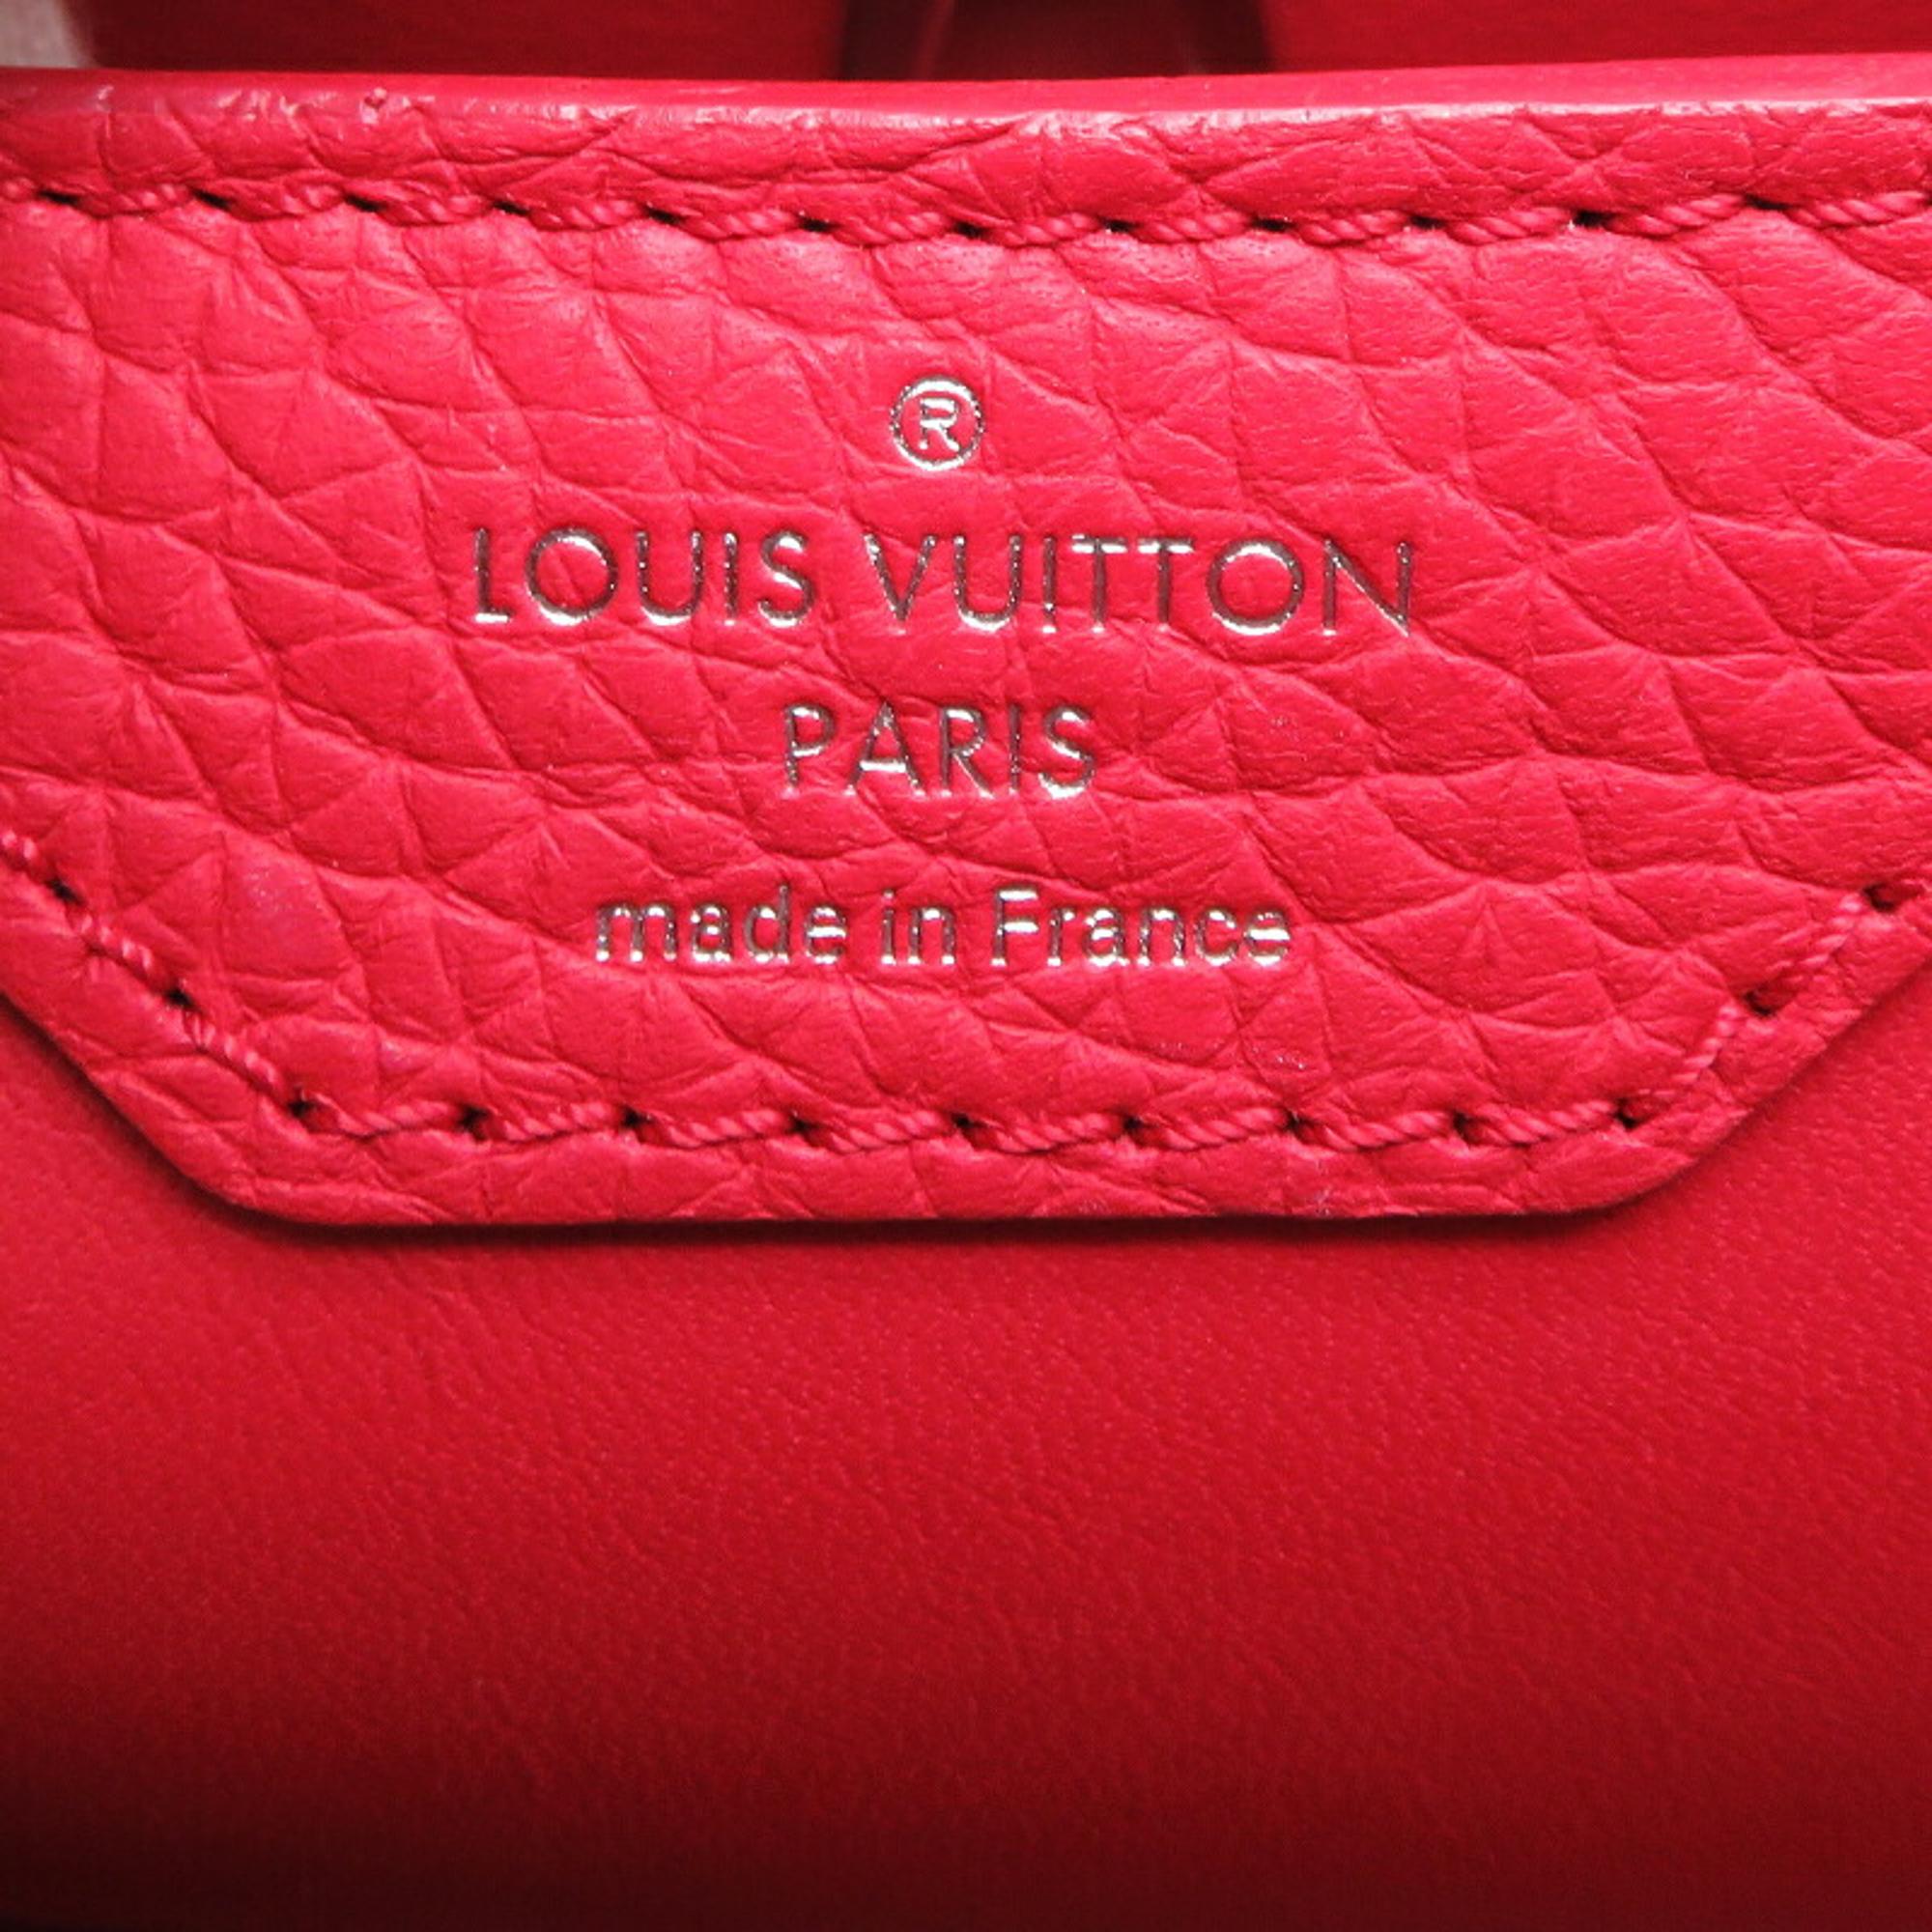 Louis Vuitton Red Leather Taurillon Capucines PM Handbag